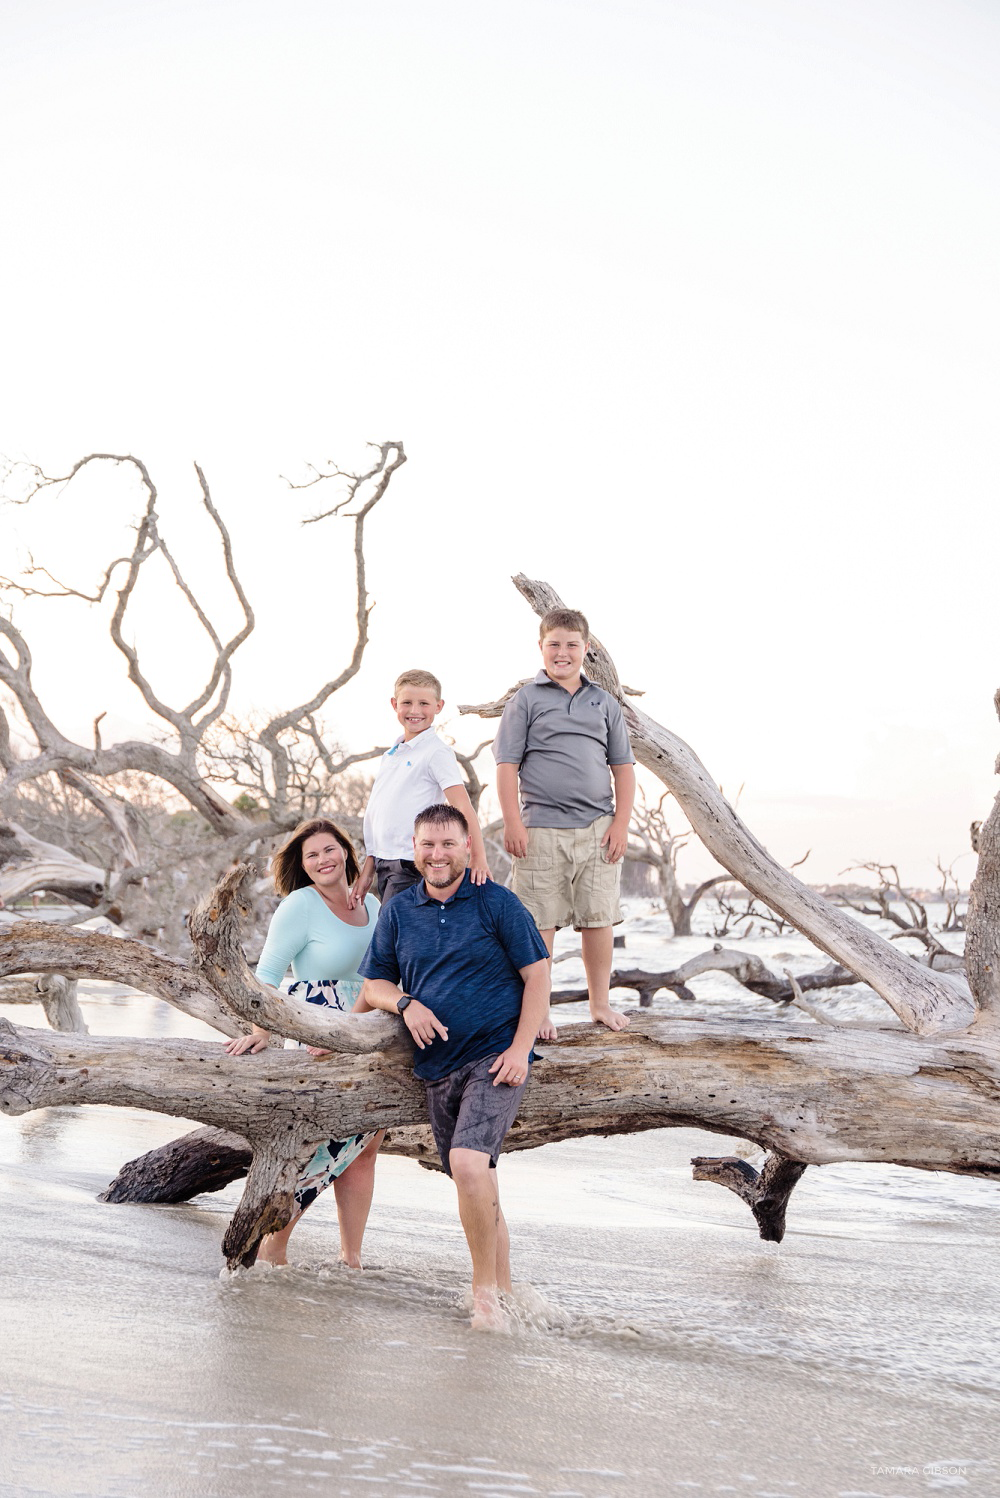 Driftwood Beach Family Photoshoot by Tamara Gibson Photography